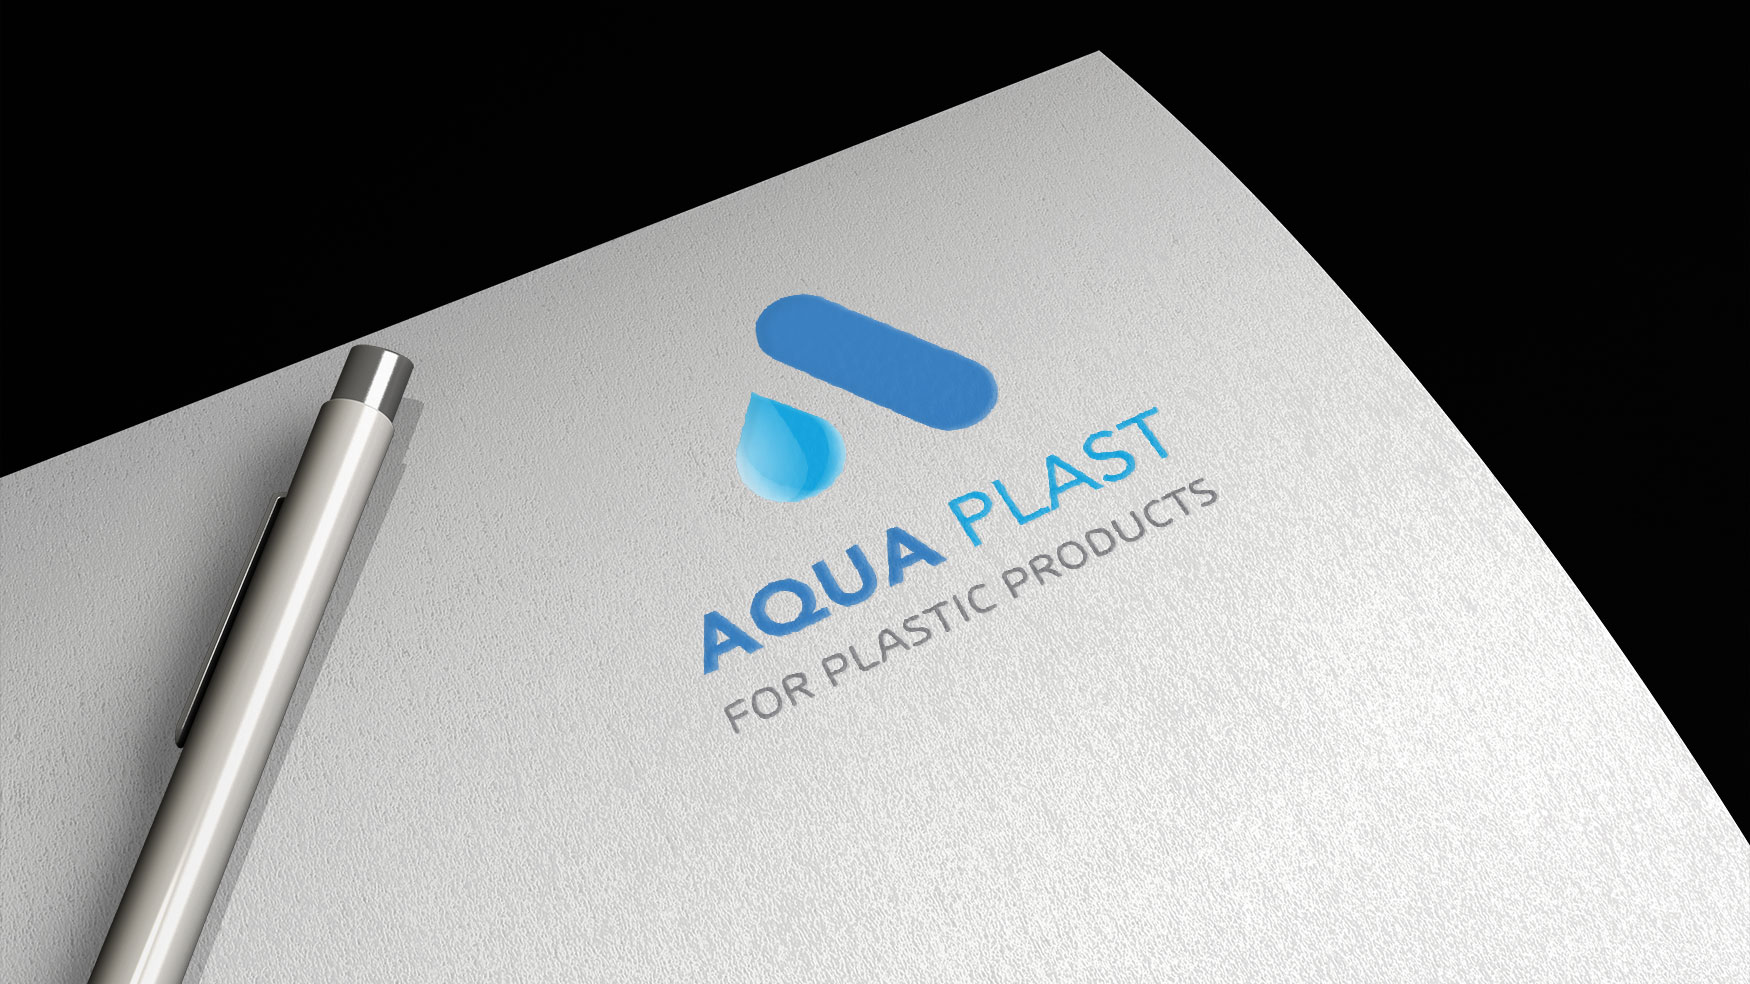 aqua plast logo branding elements logo application 